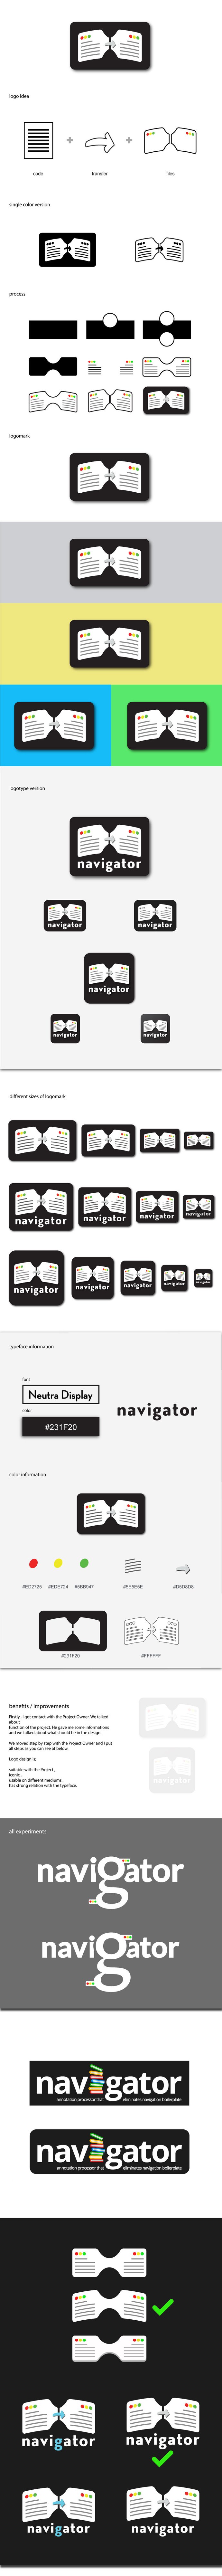 navigator-sunum2.jpg